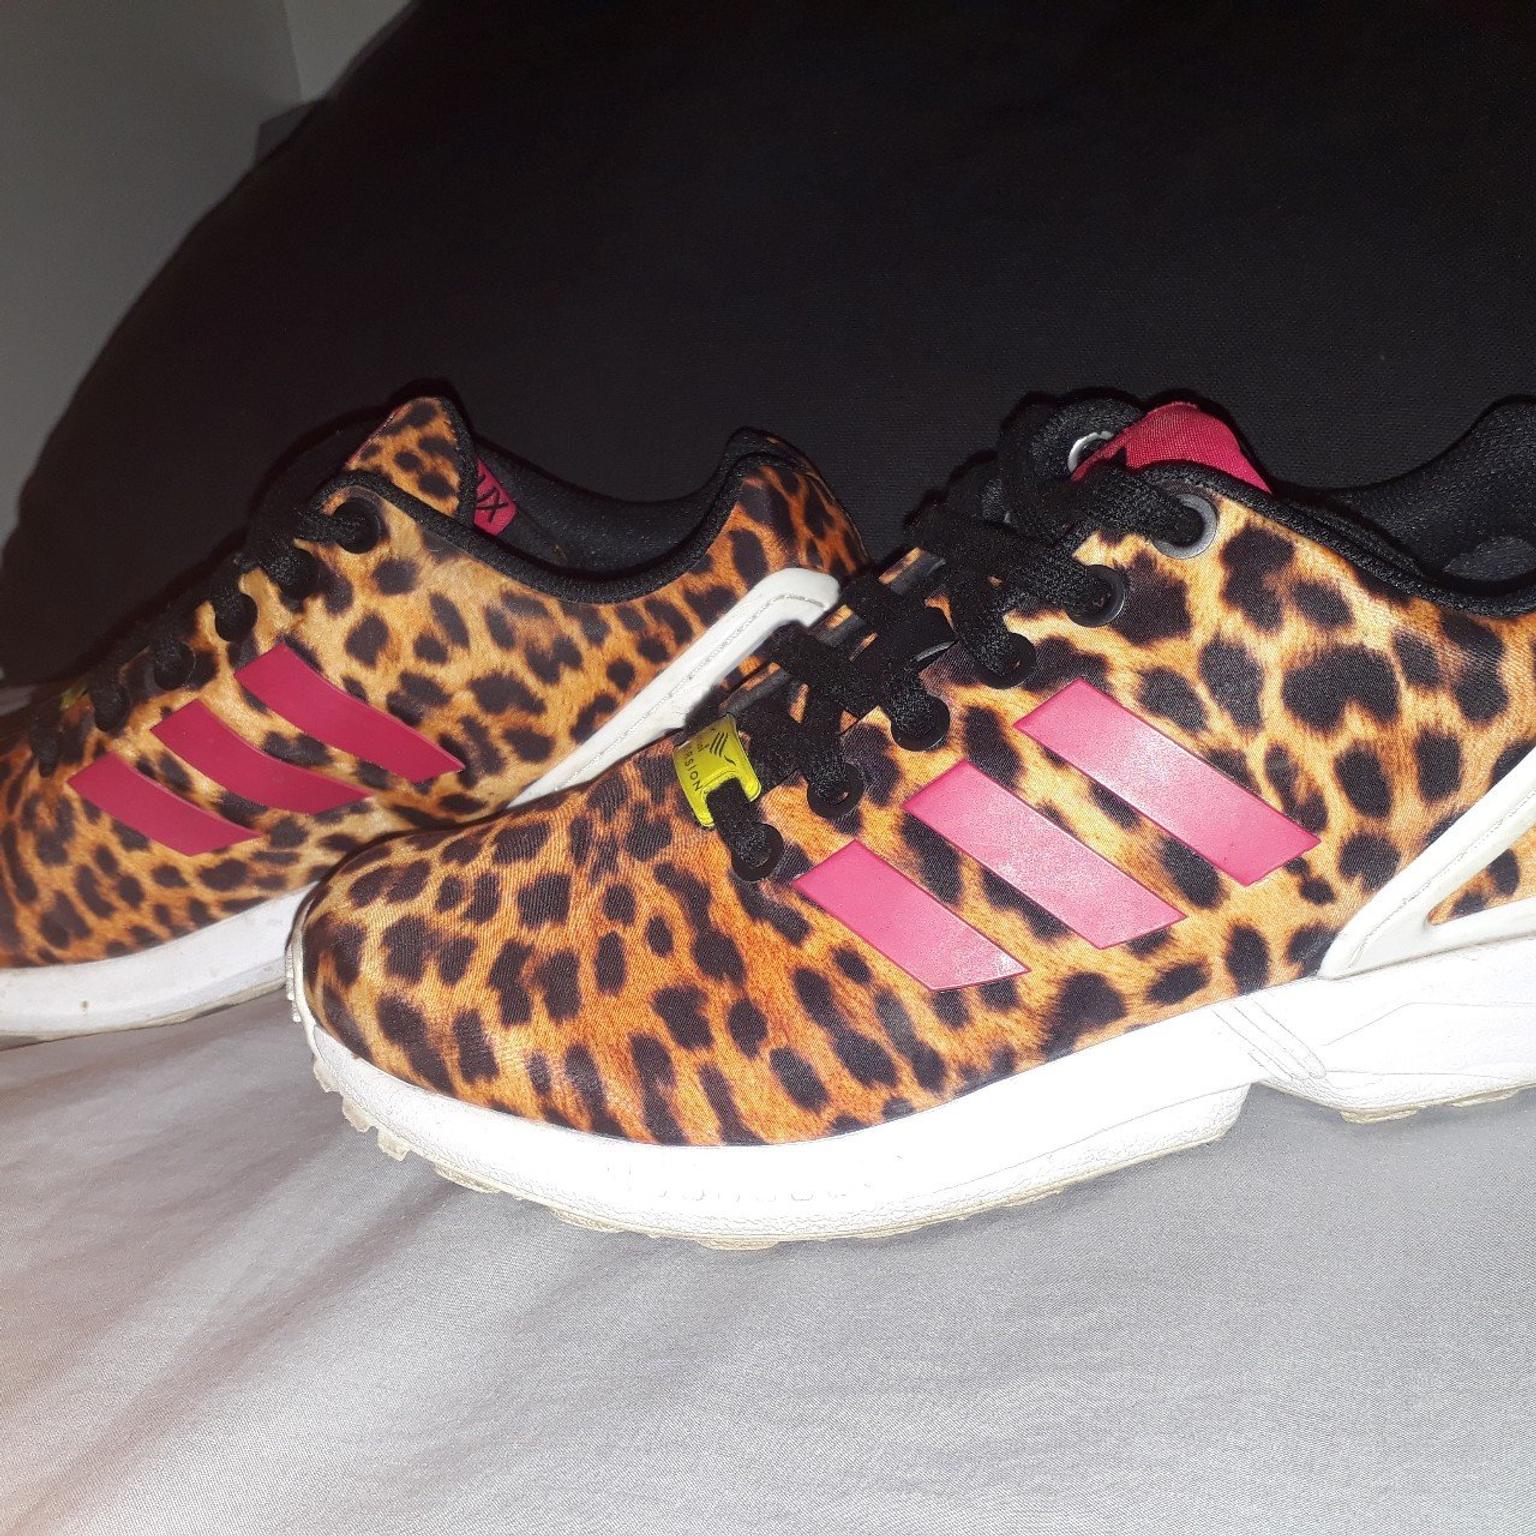 scarpe adidas zx flux leopardate